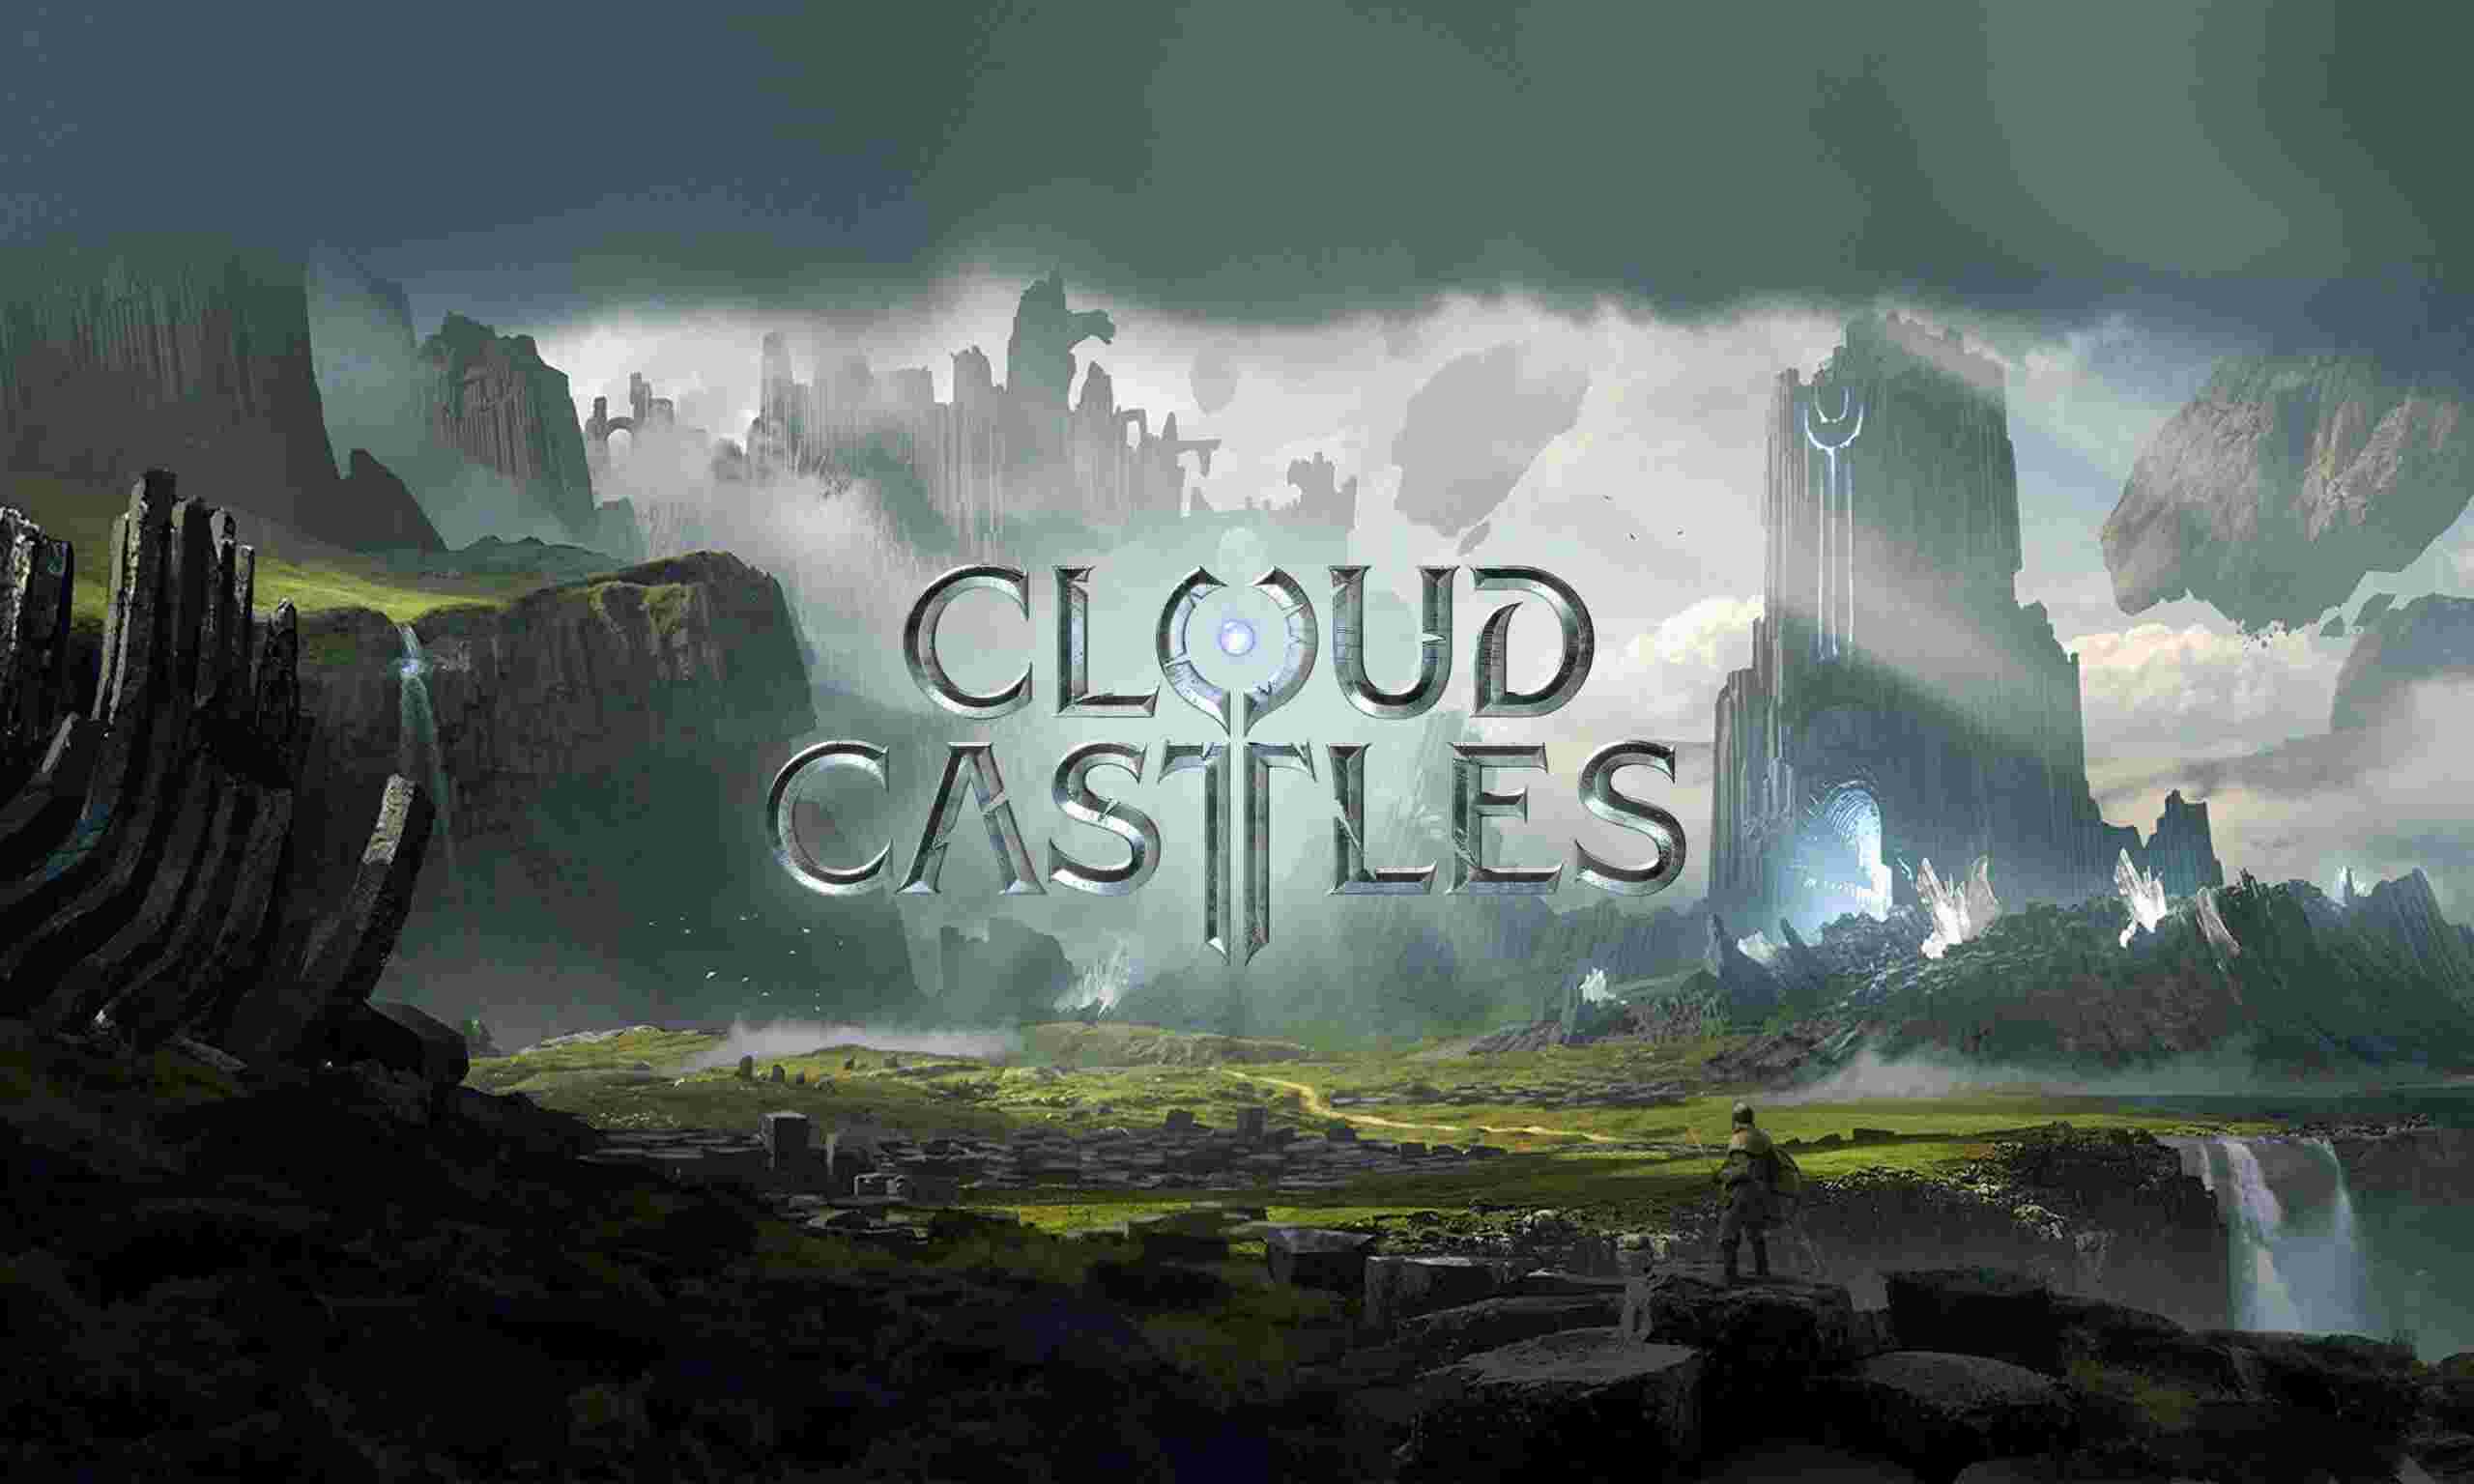 Cloud Castles - Game Review